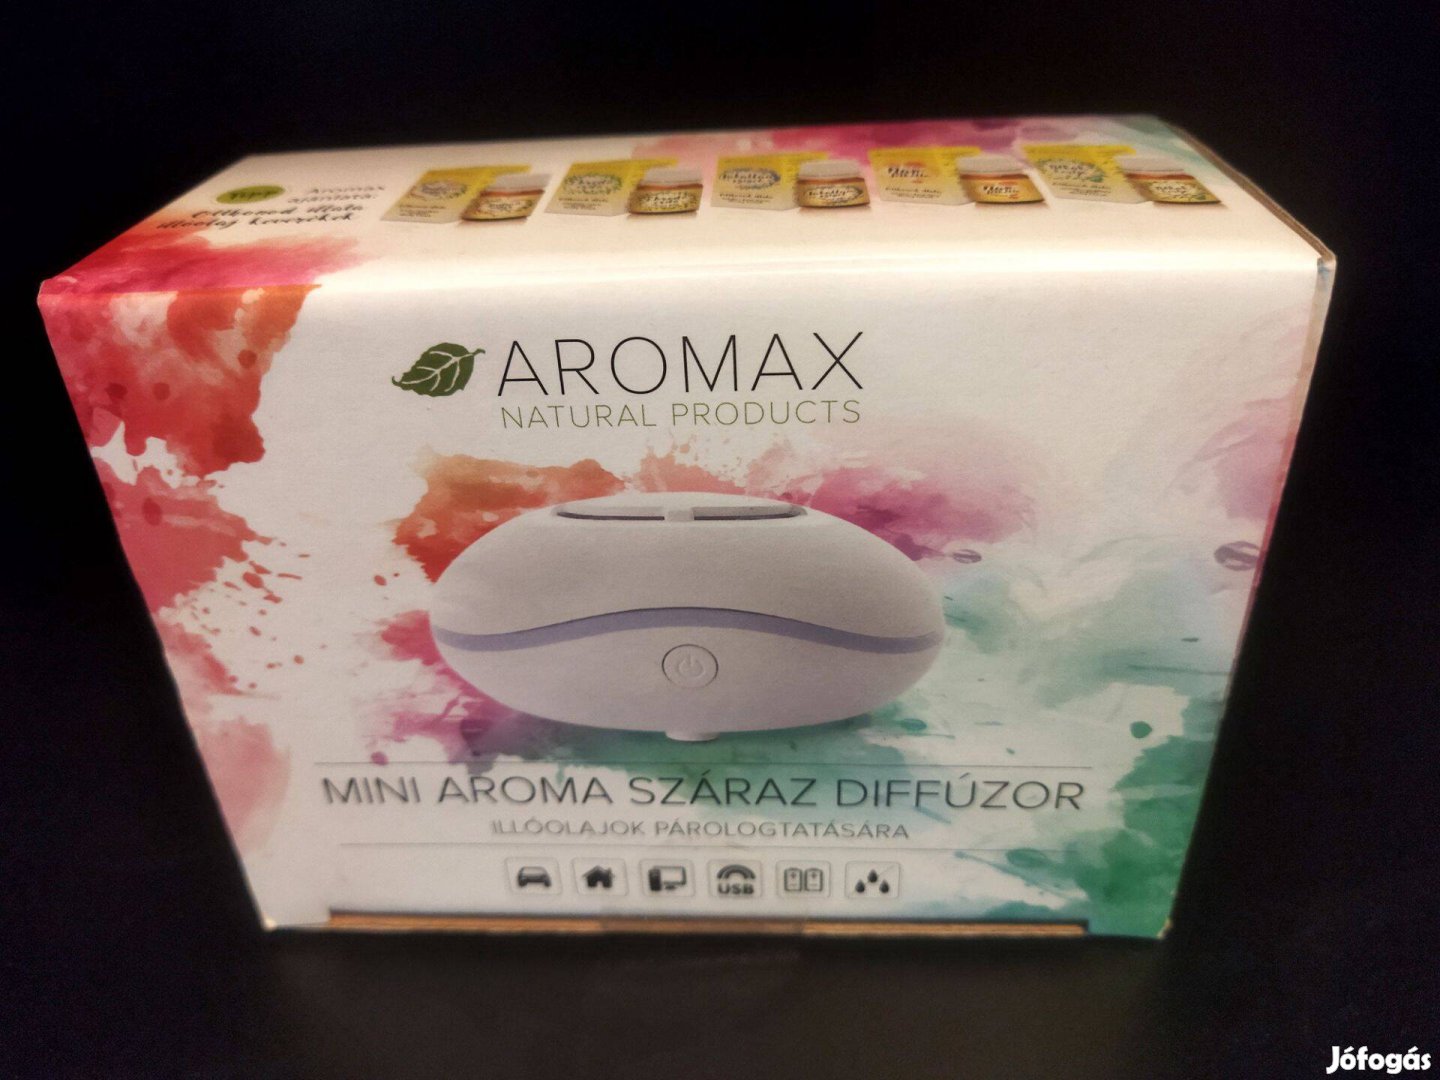 Aromax Mini aroma száraz diffúzor eladó